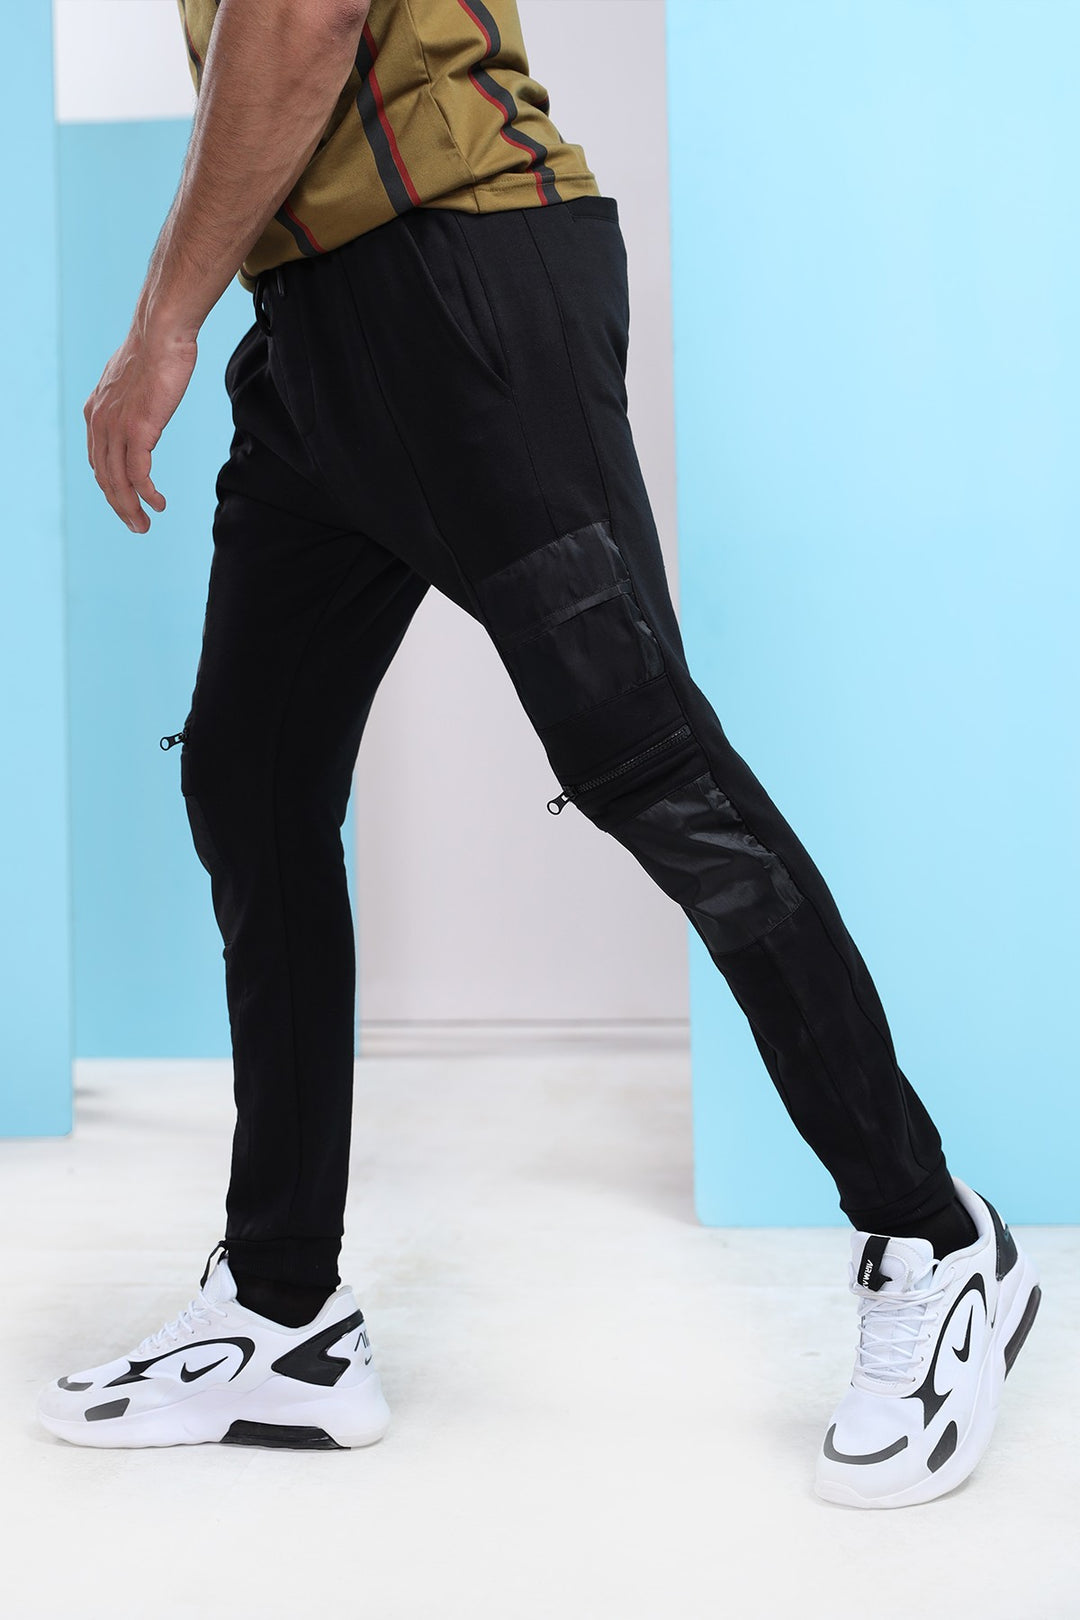 Gravity Cut & Sew Trouser - S21 - MTR016R